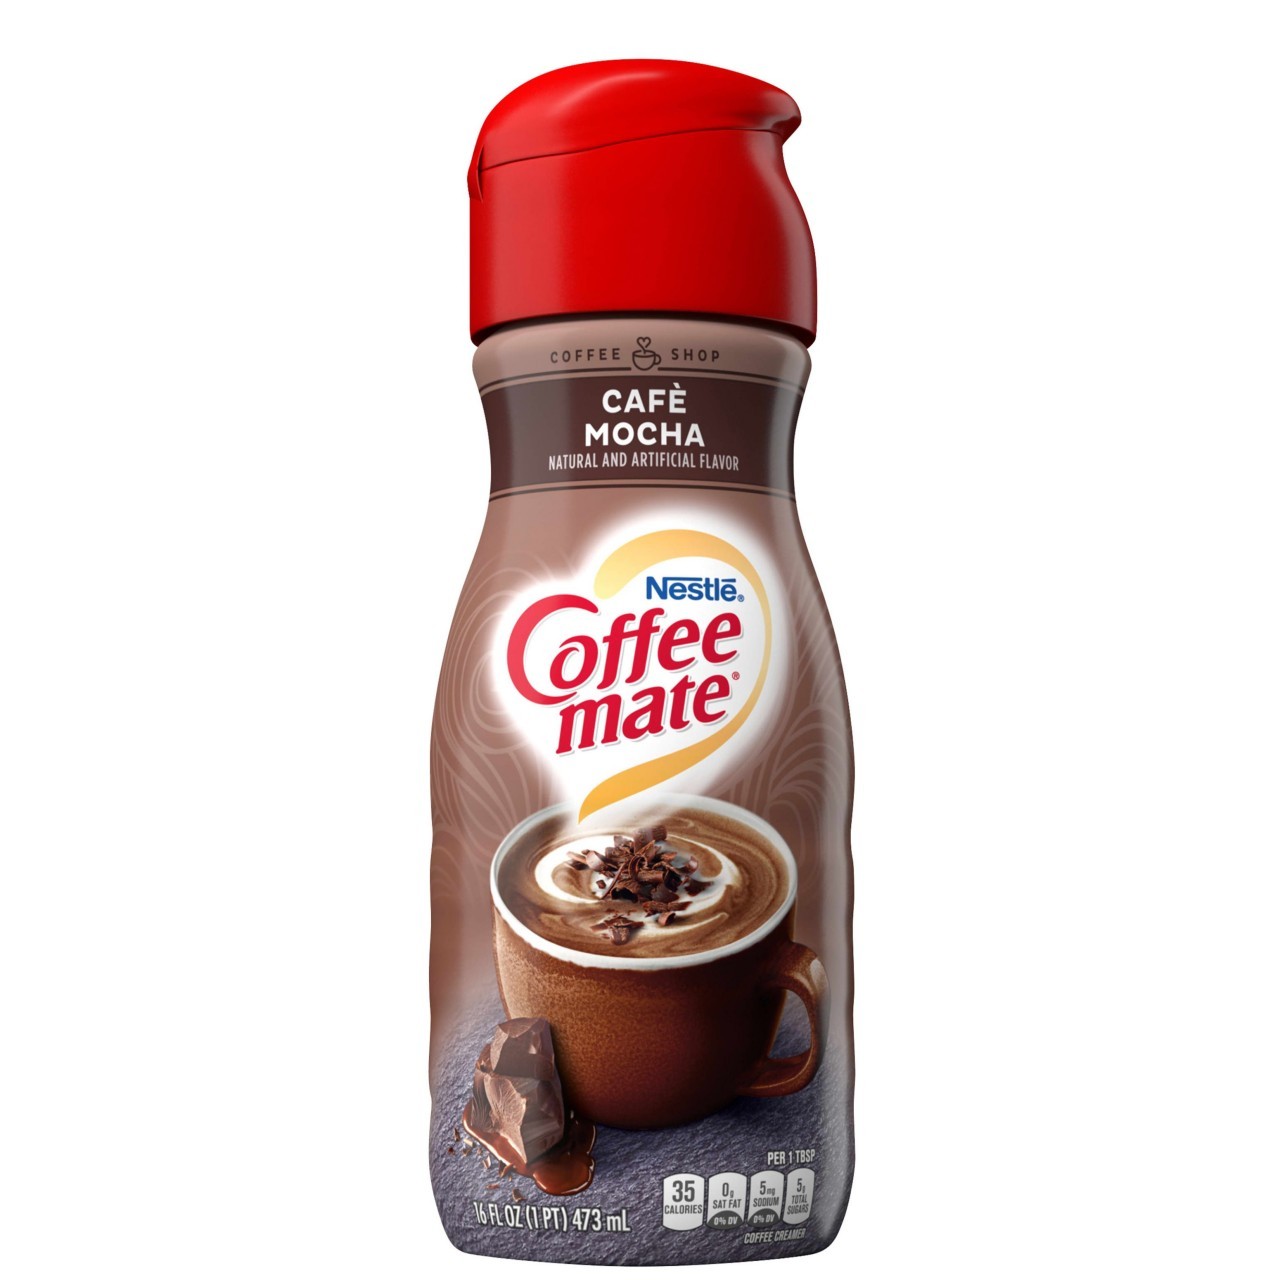 NESTLE COFFEE MATE CAFE MOCHA 16oz